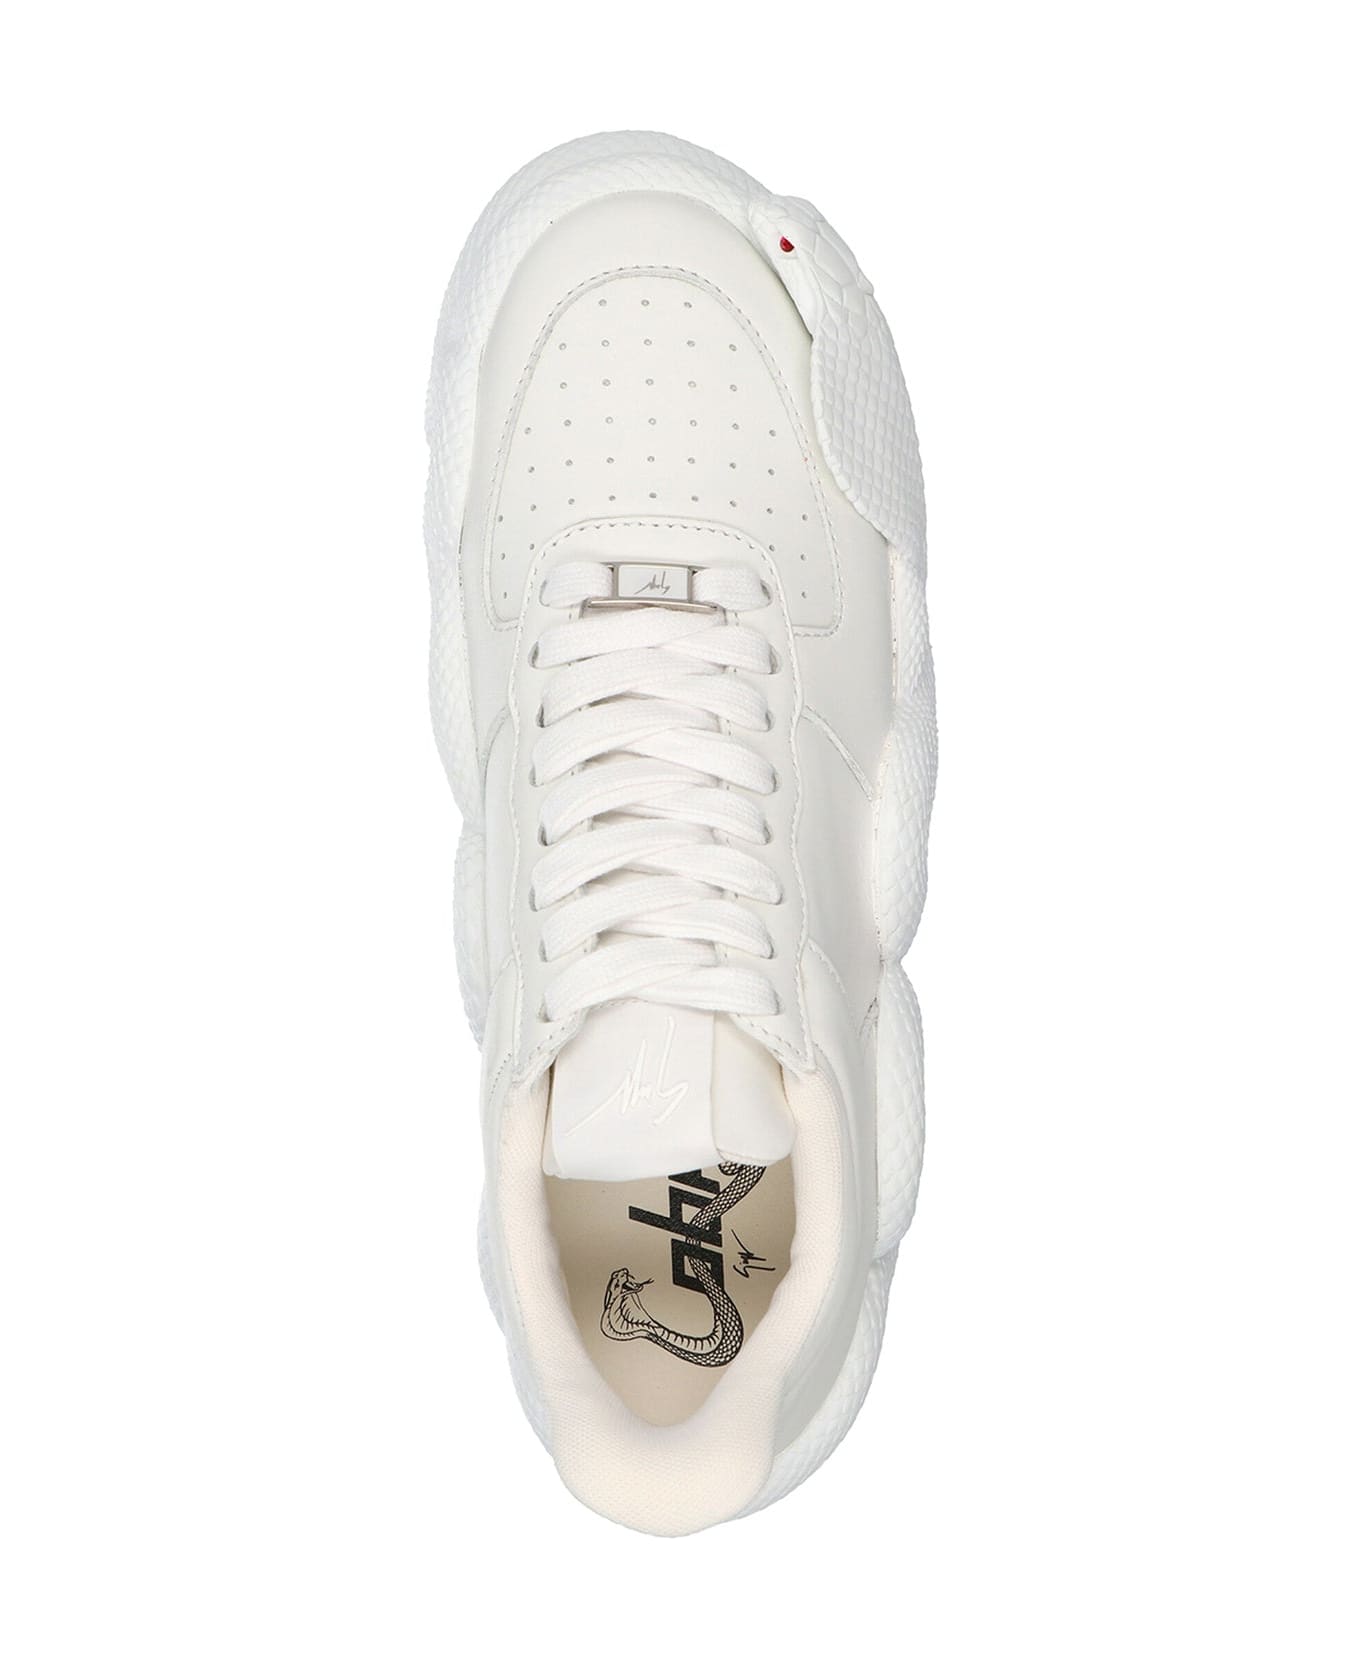 Giuseppe Zanotti Cobra Leather Sneakers - White